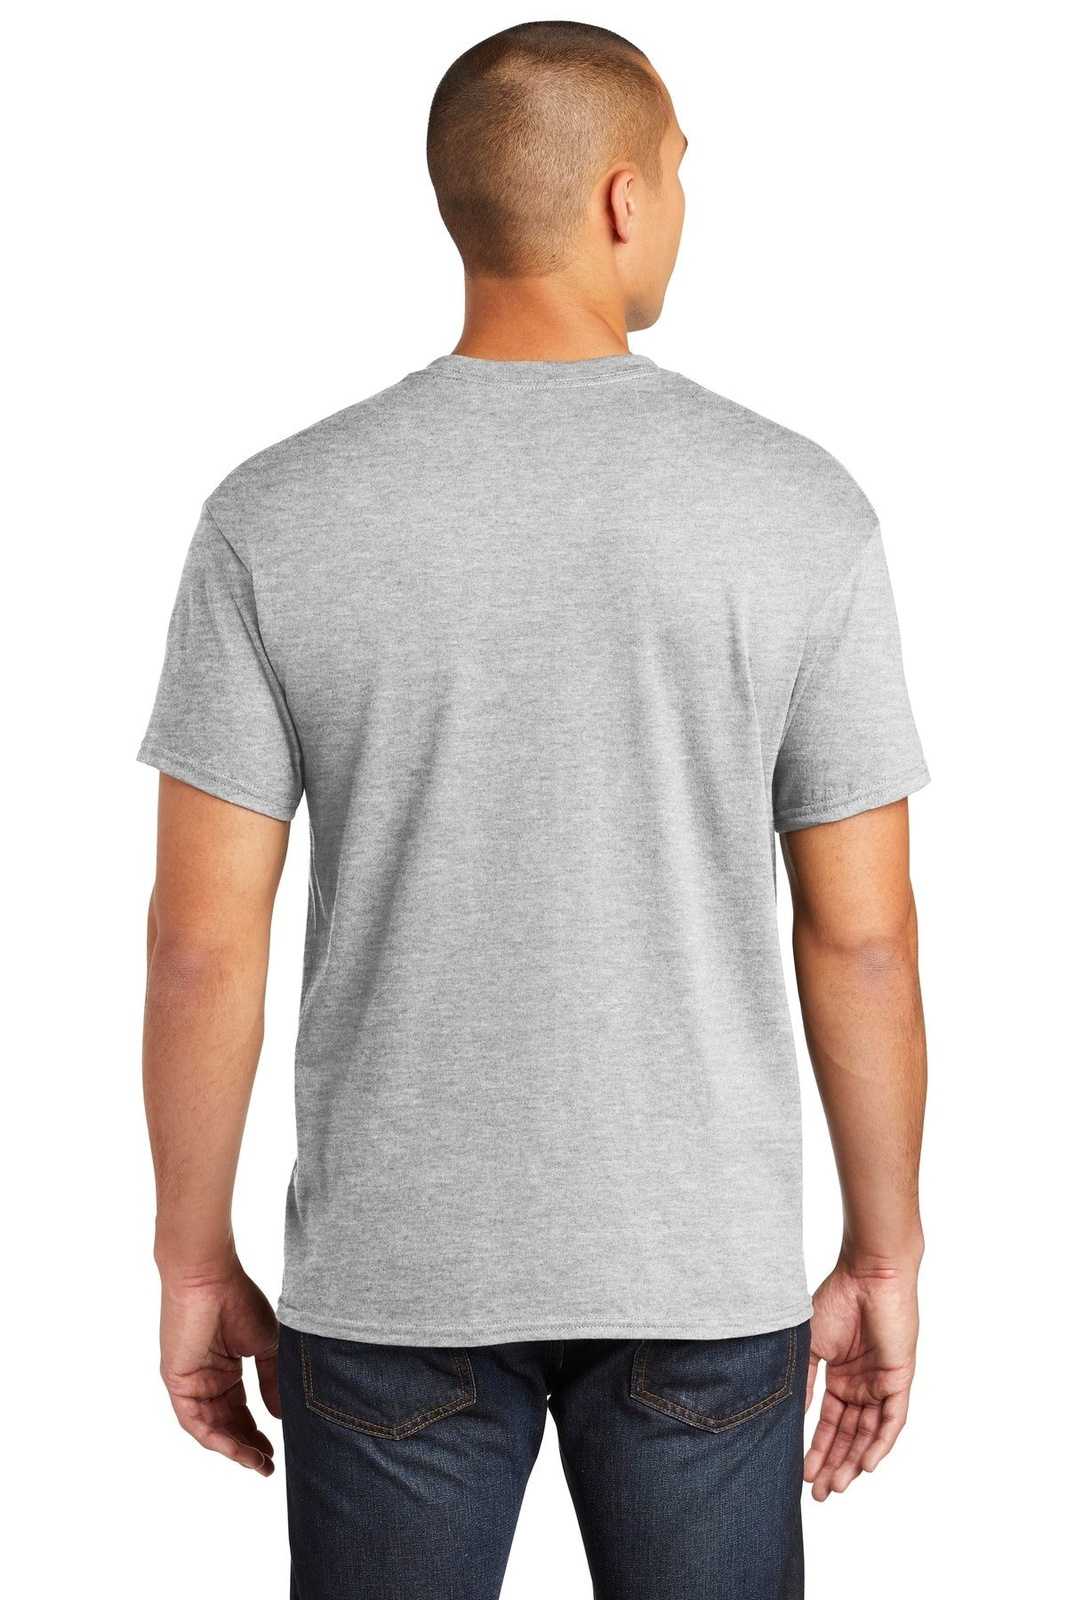 Gildan 5300 Heavy Cotton 100% Cotton Pocket T-Shirt - Sport Gray - HIT a Double